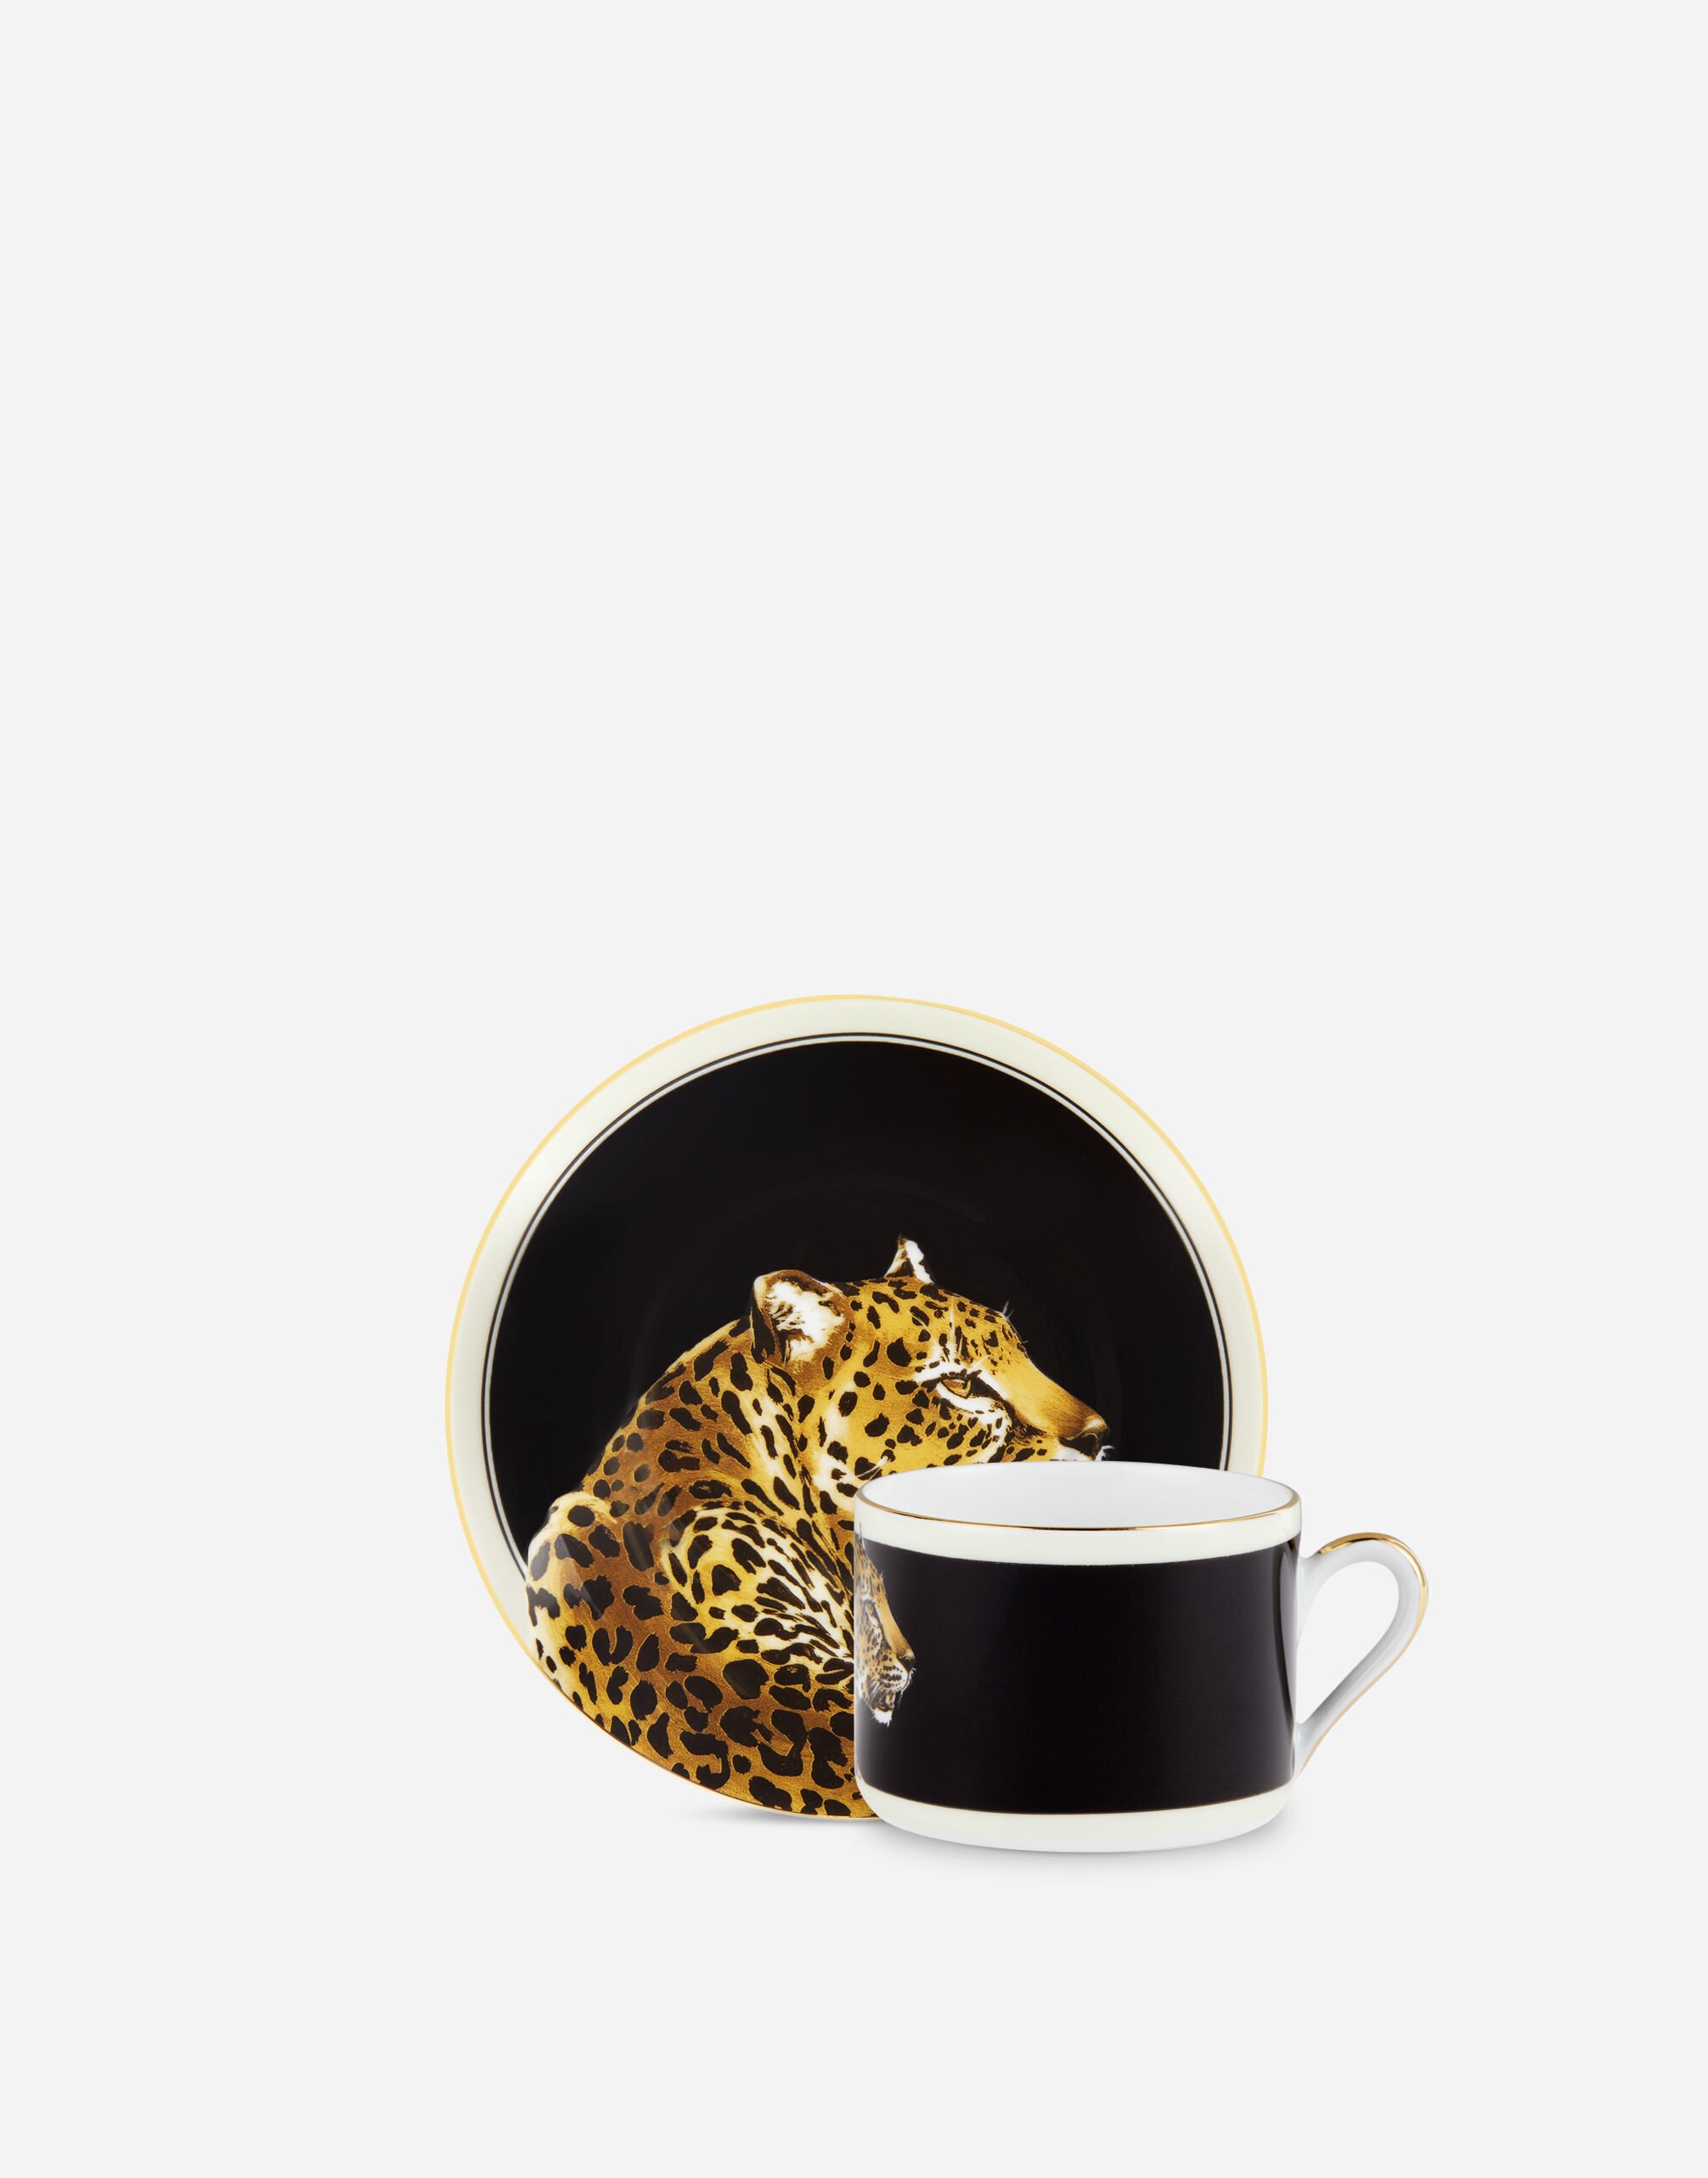 ${brand} Porcelain Tea Set ${colorDescription} ${masterID}